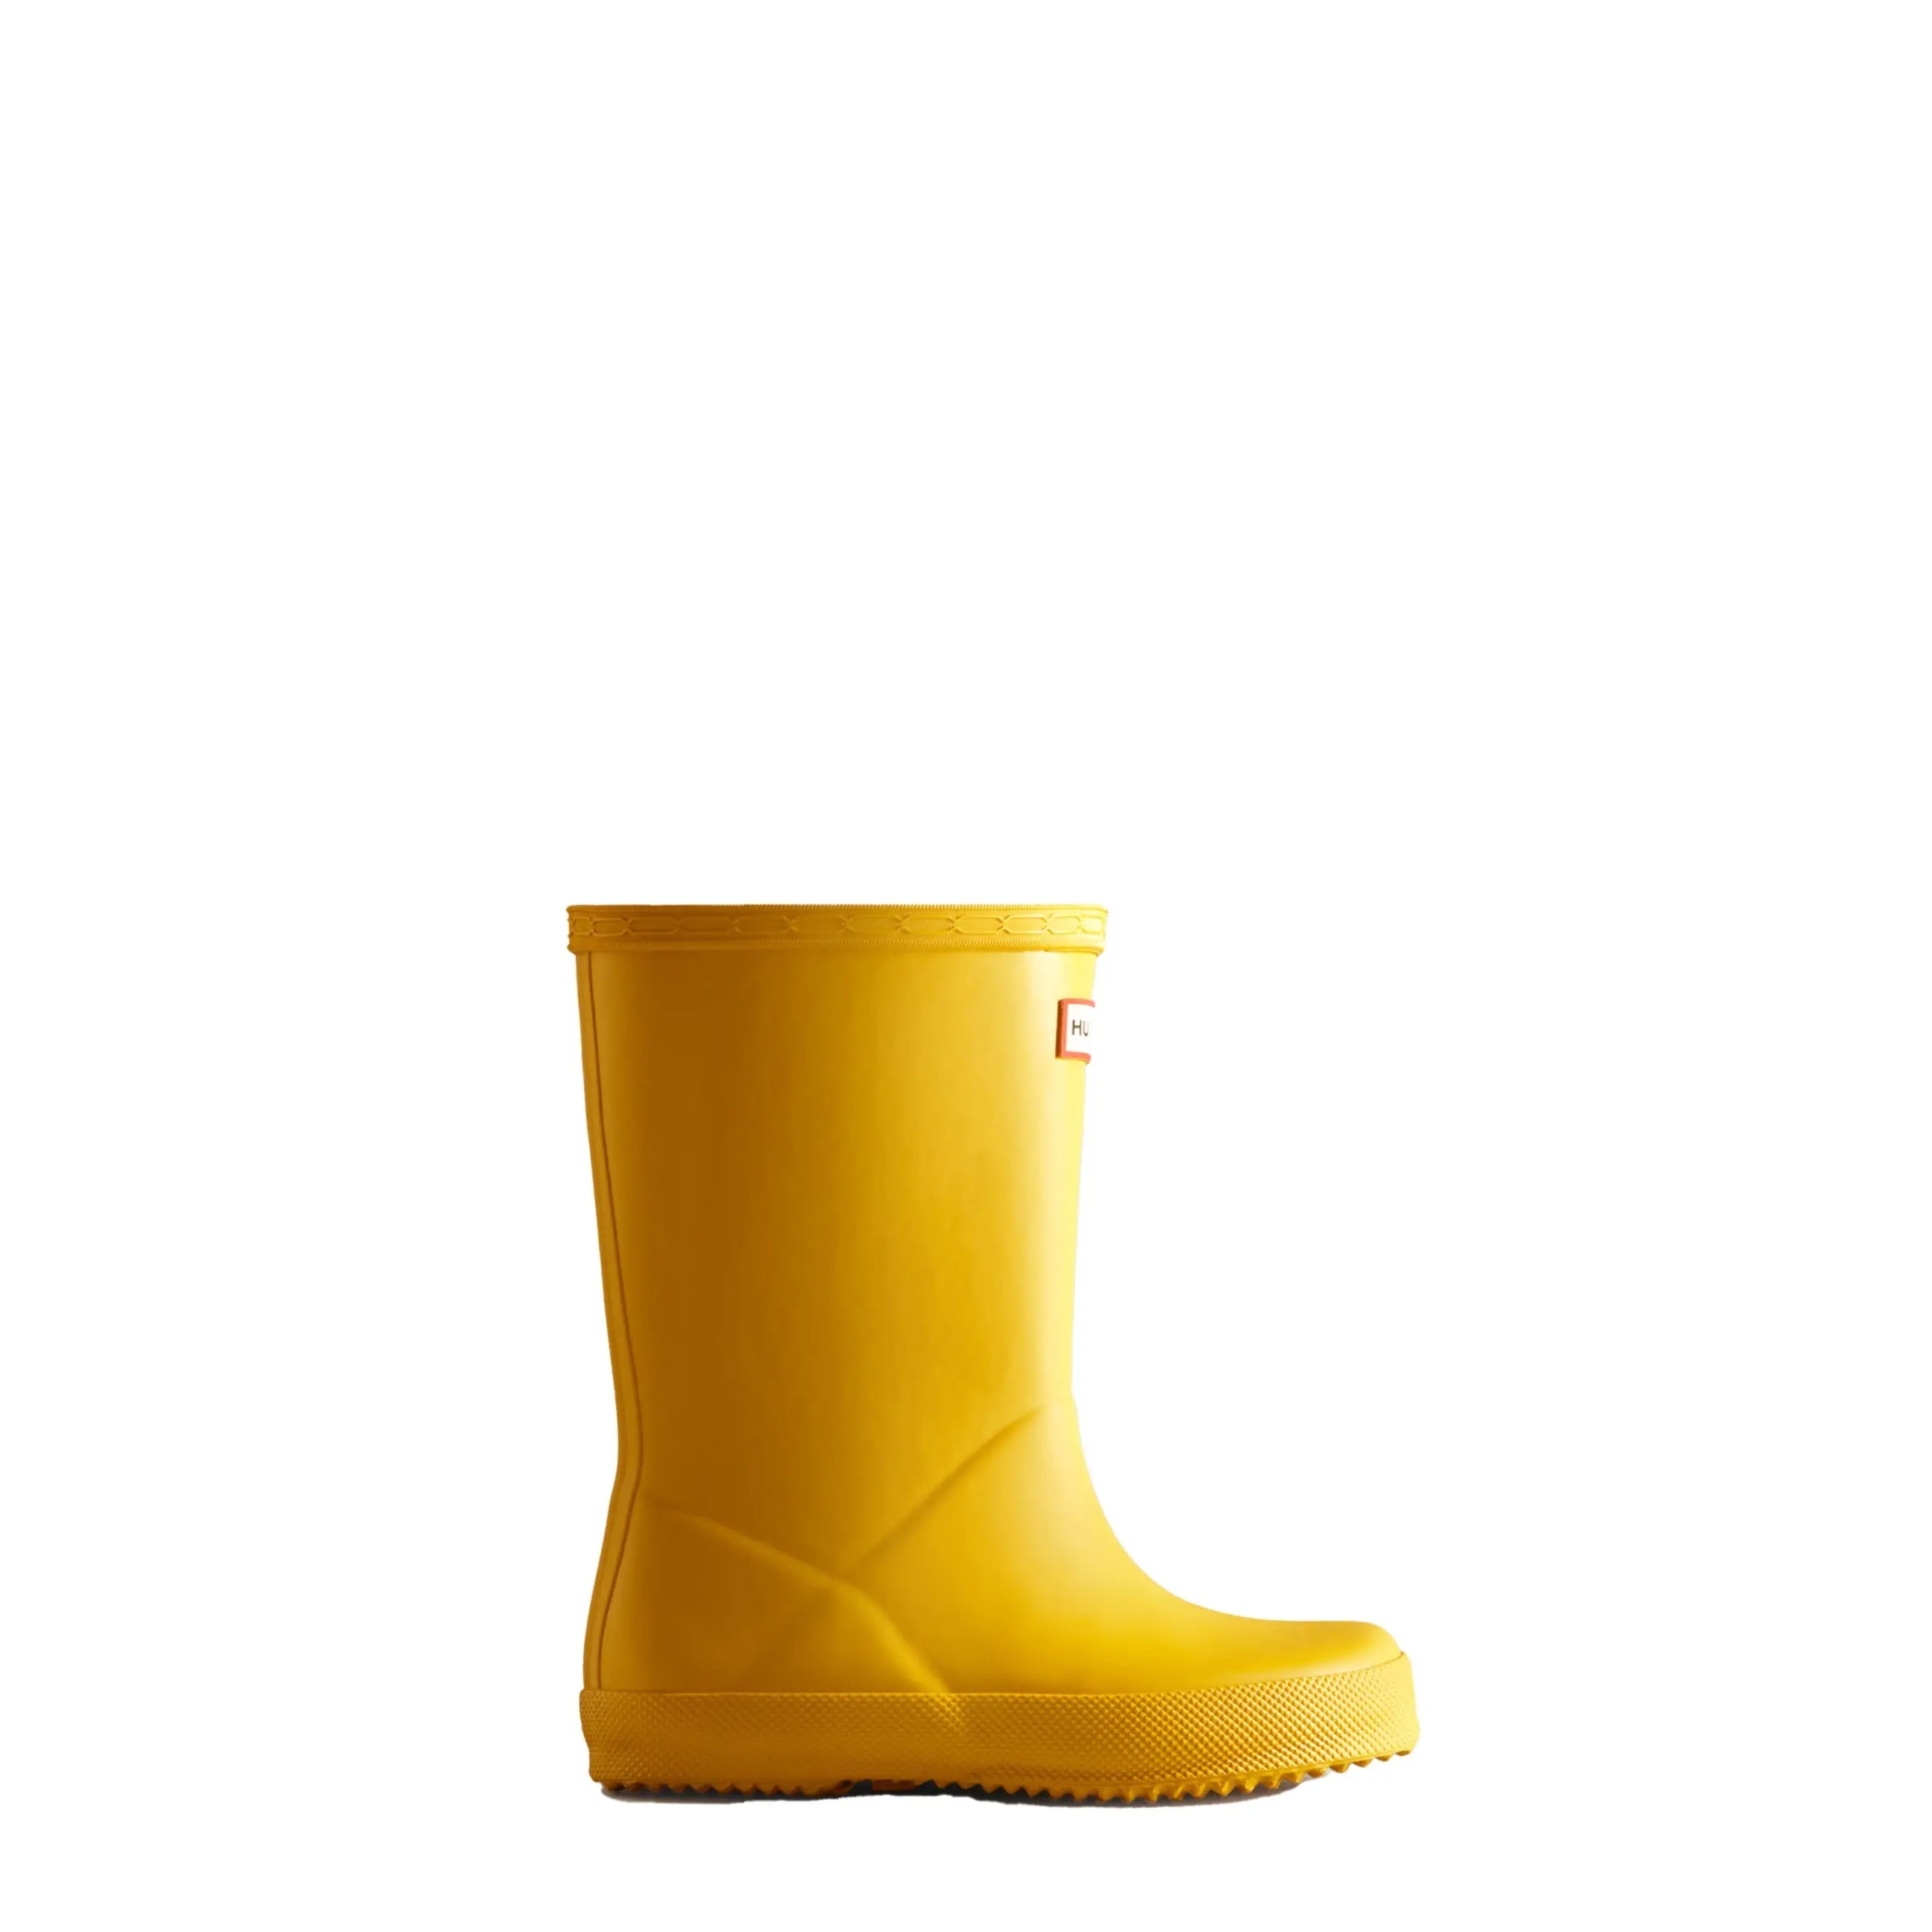 Kids First Classic Rain Boots - Hunter Boots Kids First Classic Rain Boots Yellow Hunter Boots Kids First > Rain Boots > Kids First Rain Boots